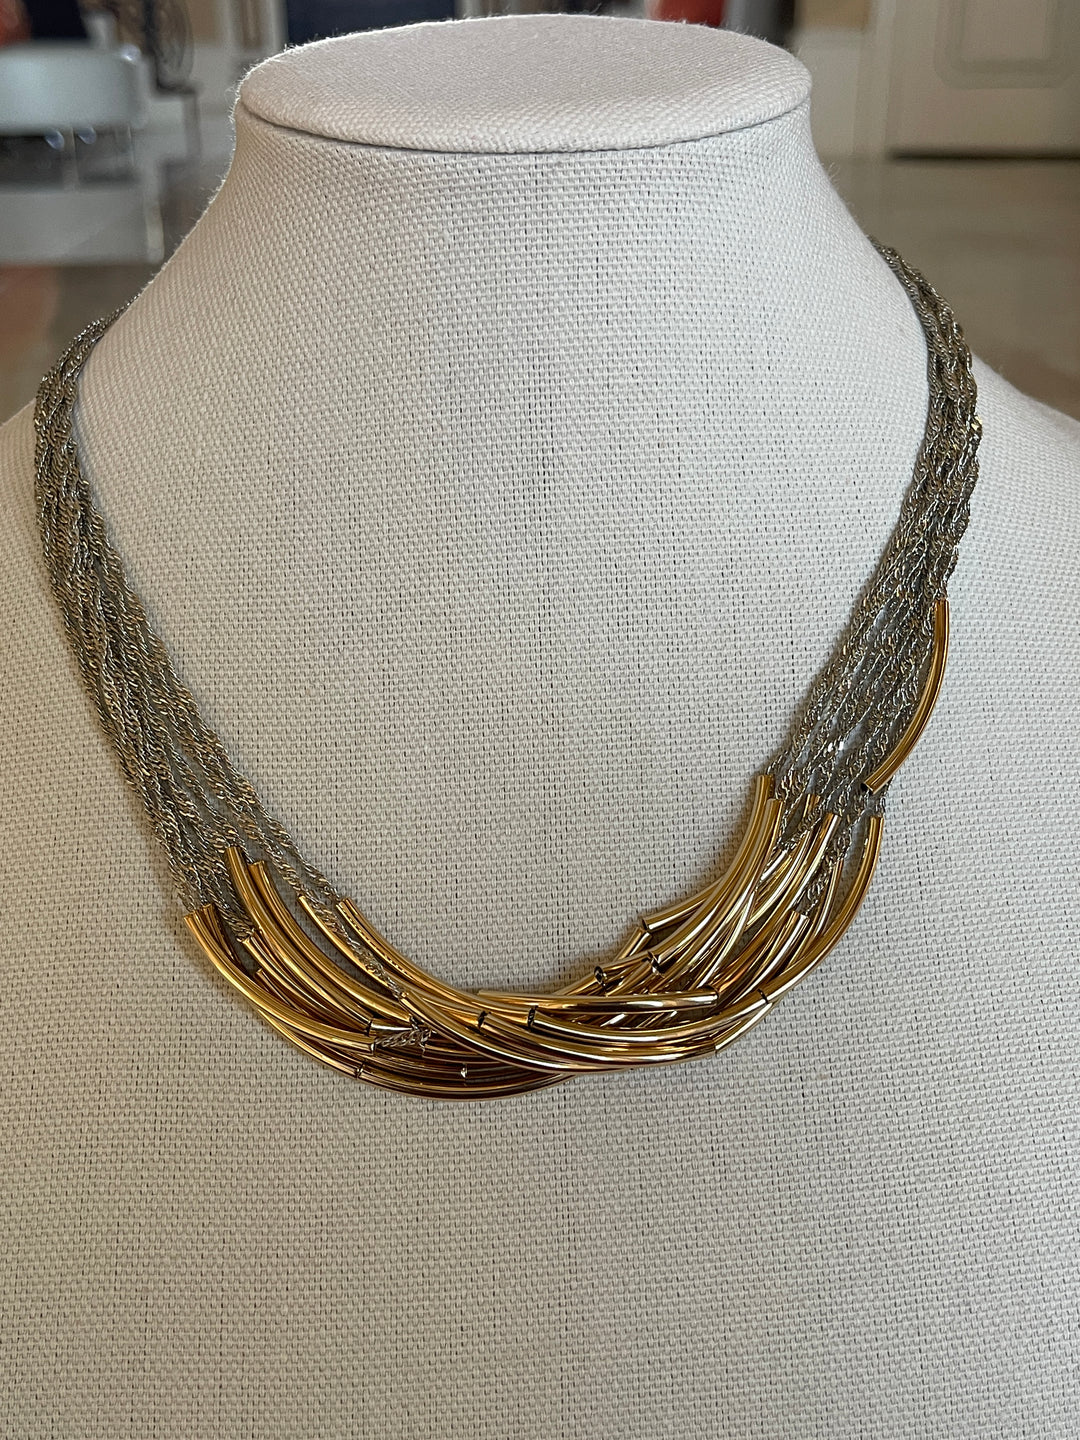 Gold Multi Strand Necklace